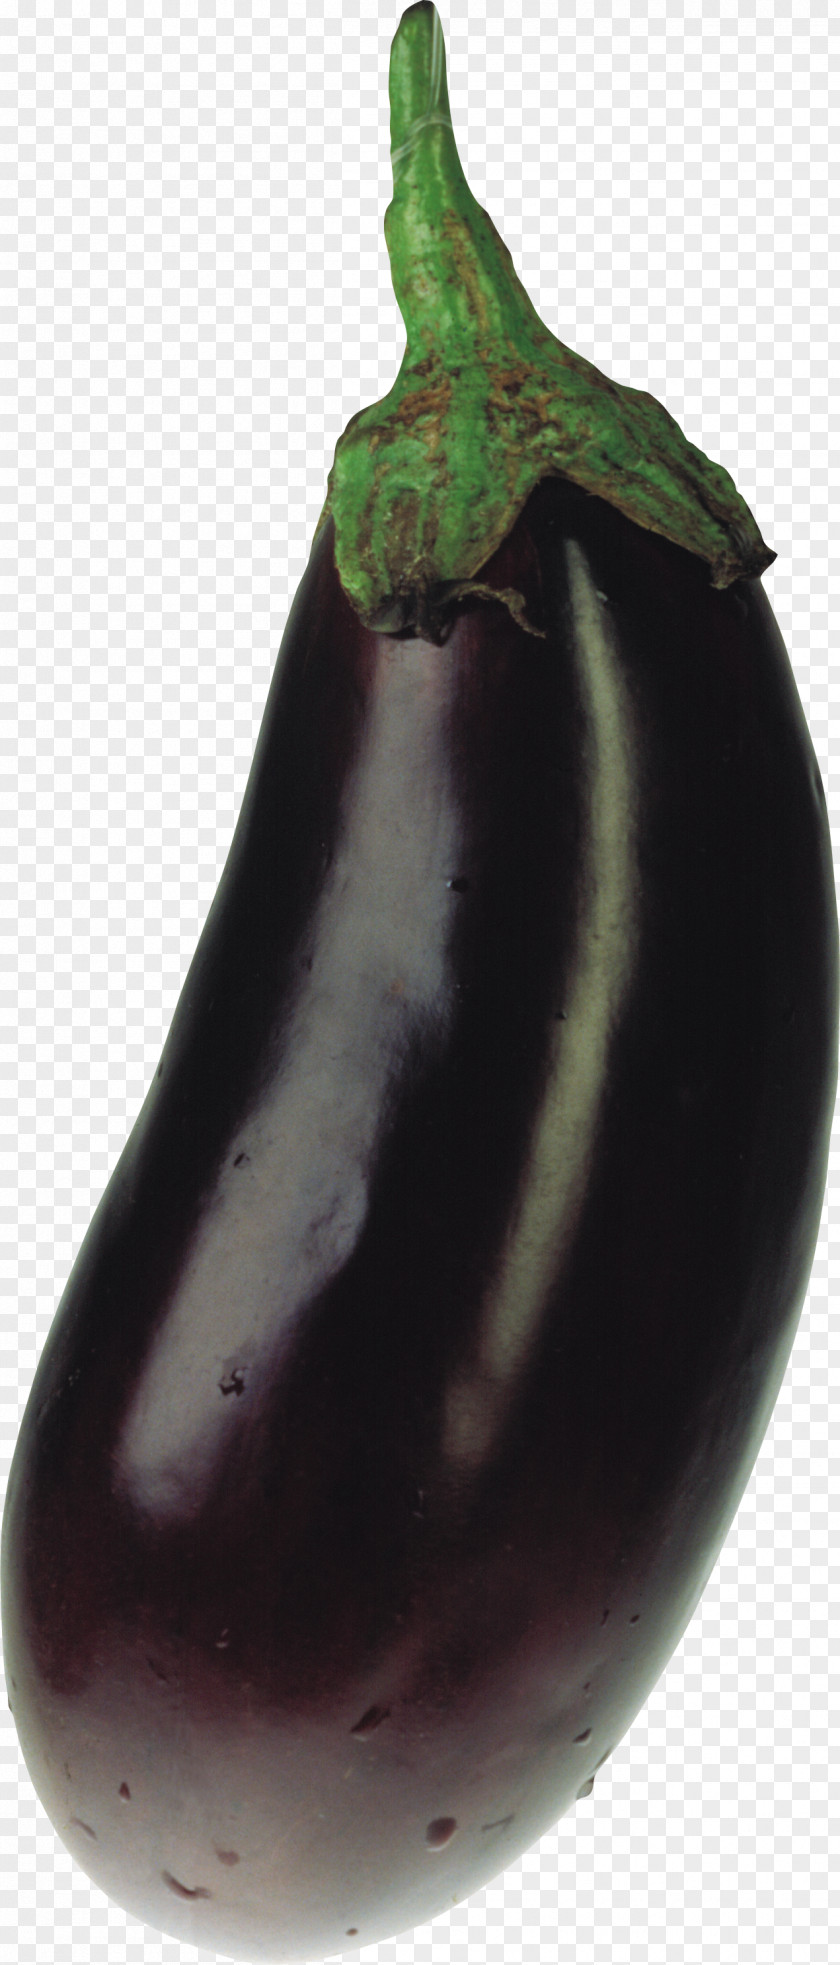 Eggplant Images Free Download Fried Parmigiana İmam Bayıldı Karnıyarık PNG